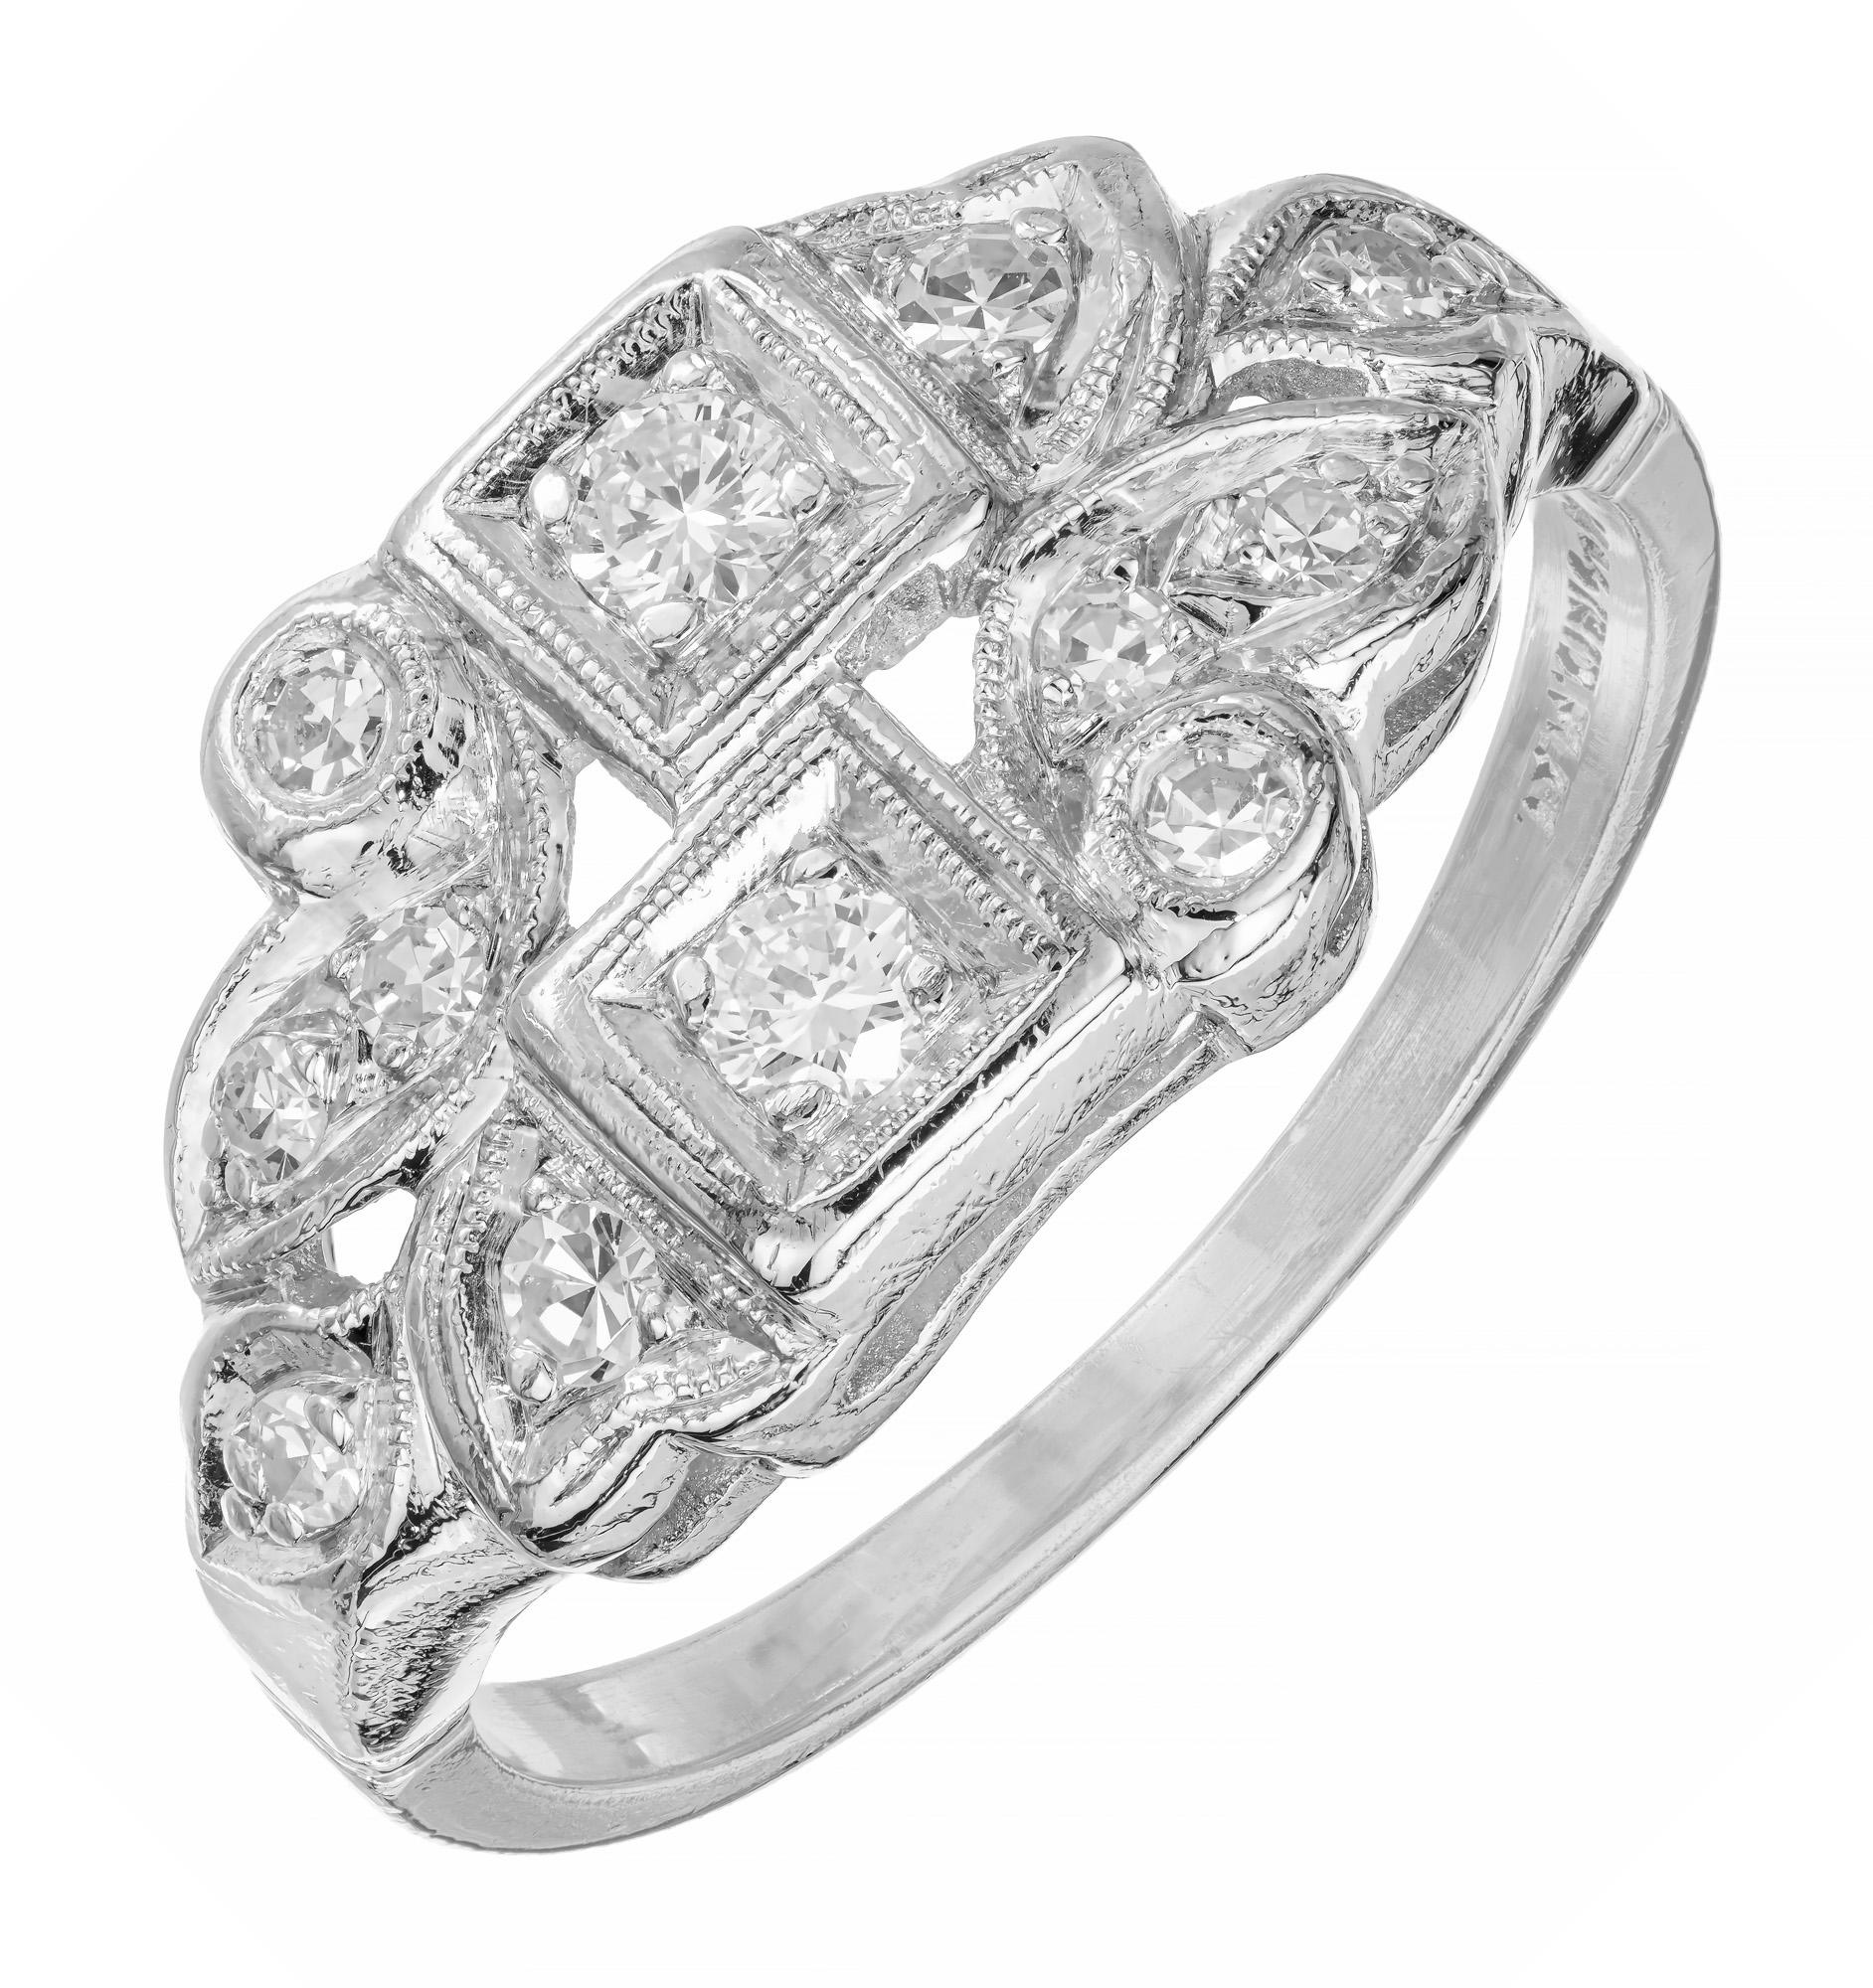 Simple yet stylish 1940's  swirl platinum diamond ring. 2 full cut diamonds set in platinum with 10 round single cut accent diamonds.

2 full cut diamonds, G-H vS approx. .14cts
10 single cut diamonds, G-H VS approx..17cts
Size 7.75 and